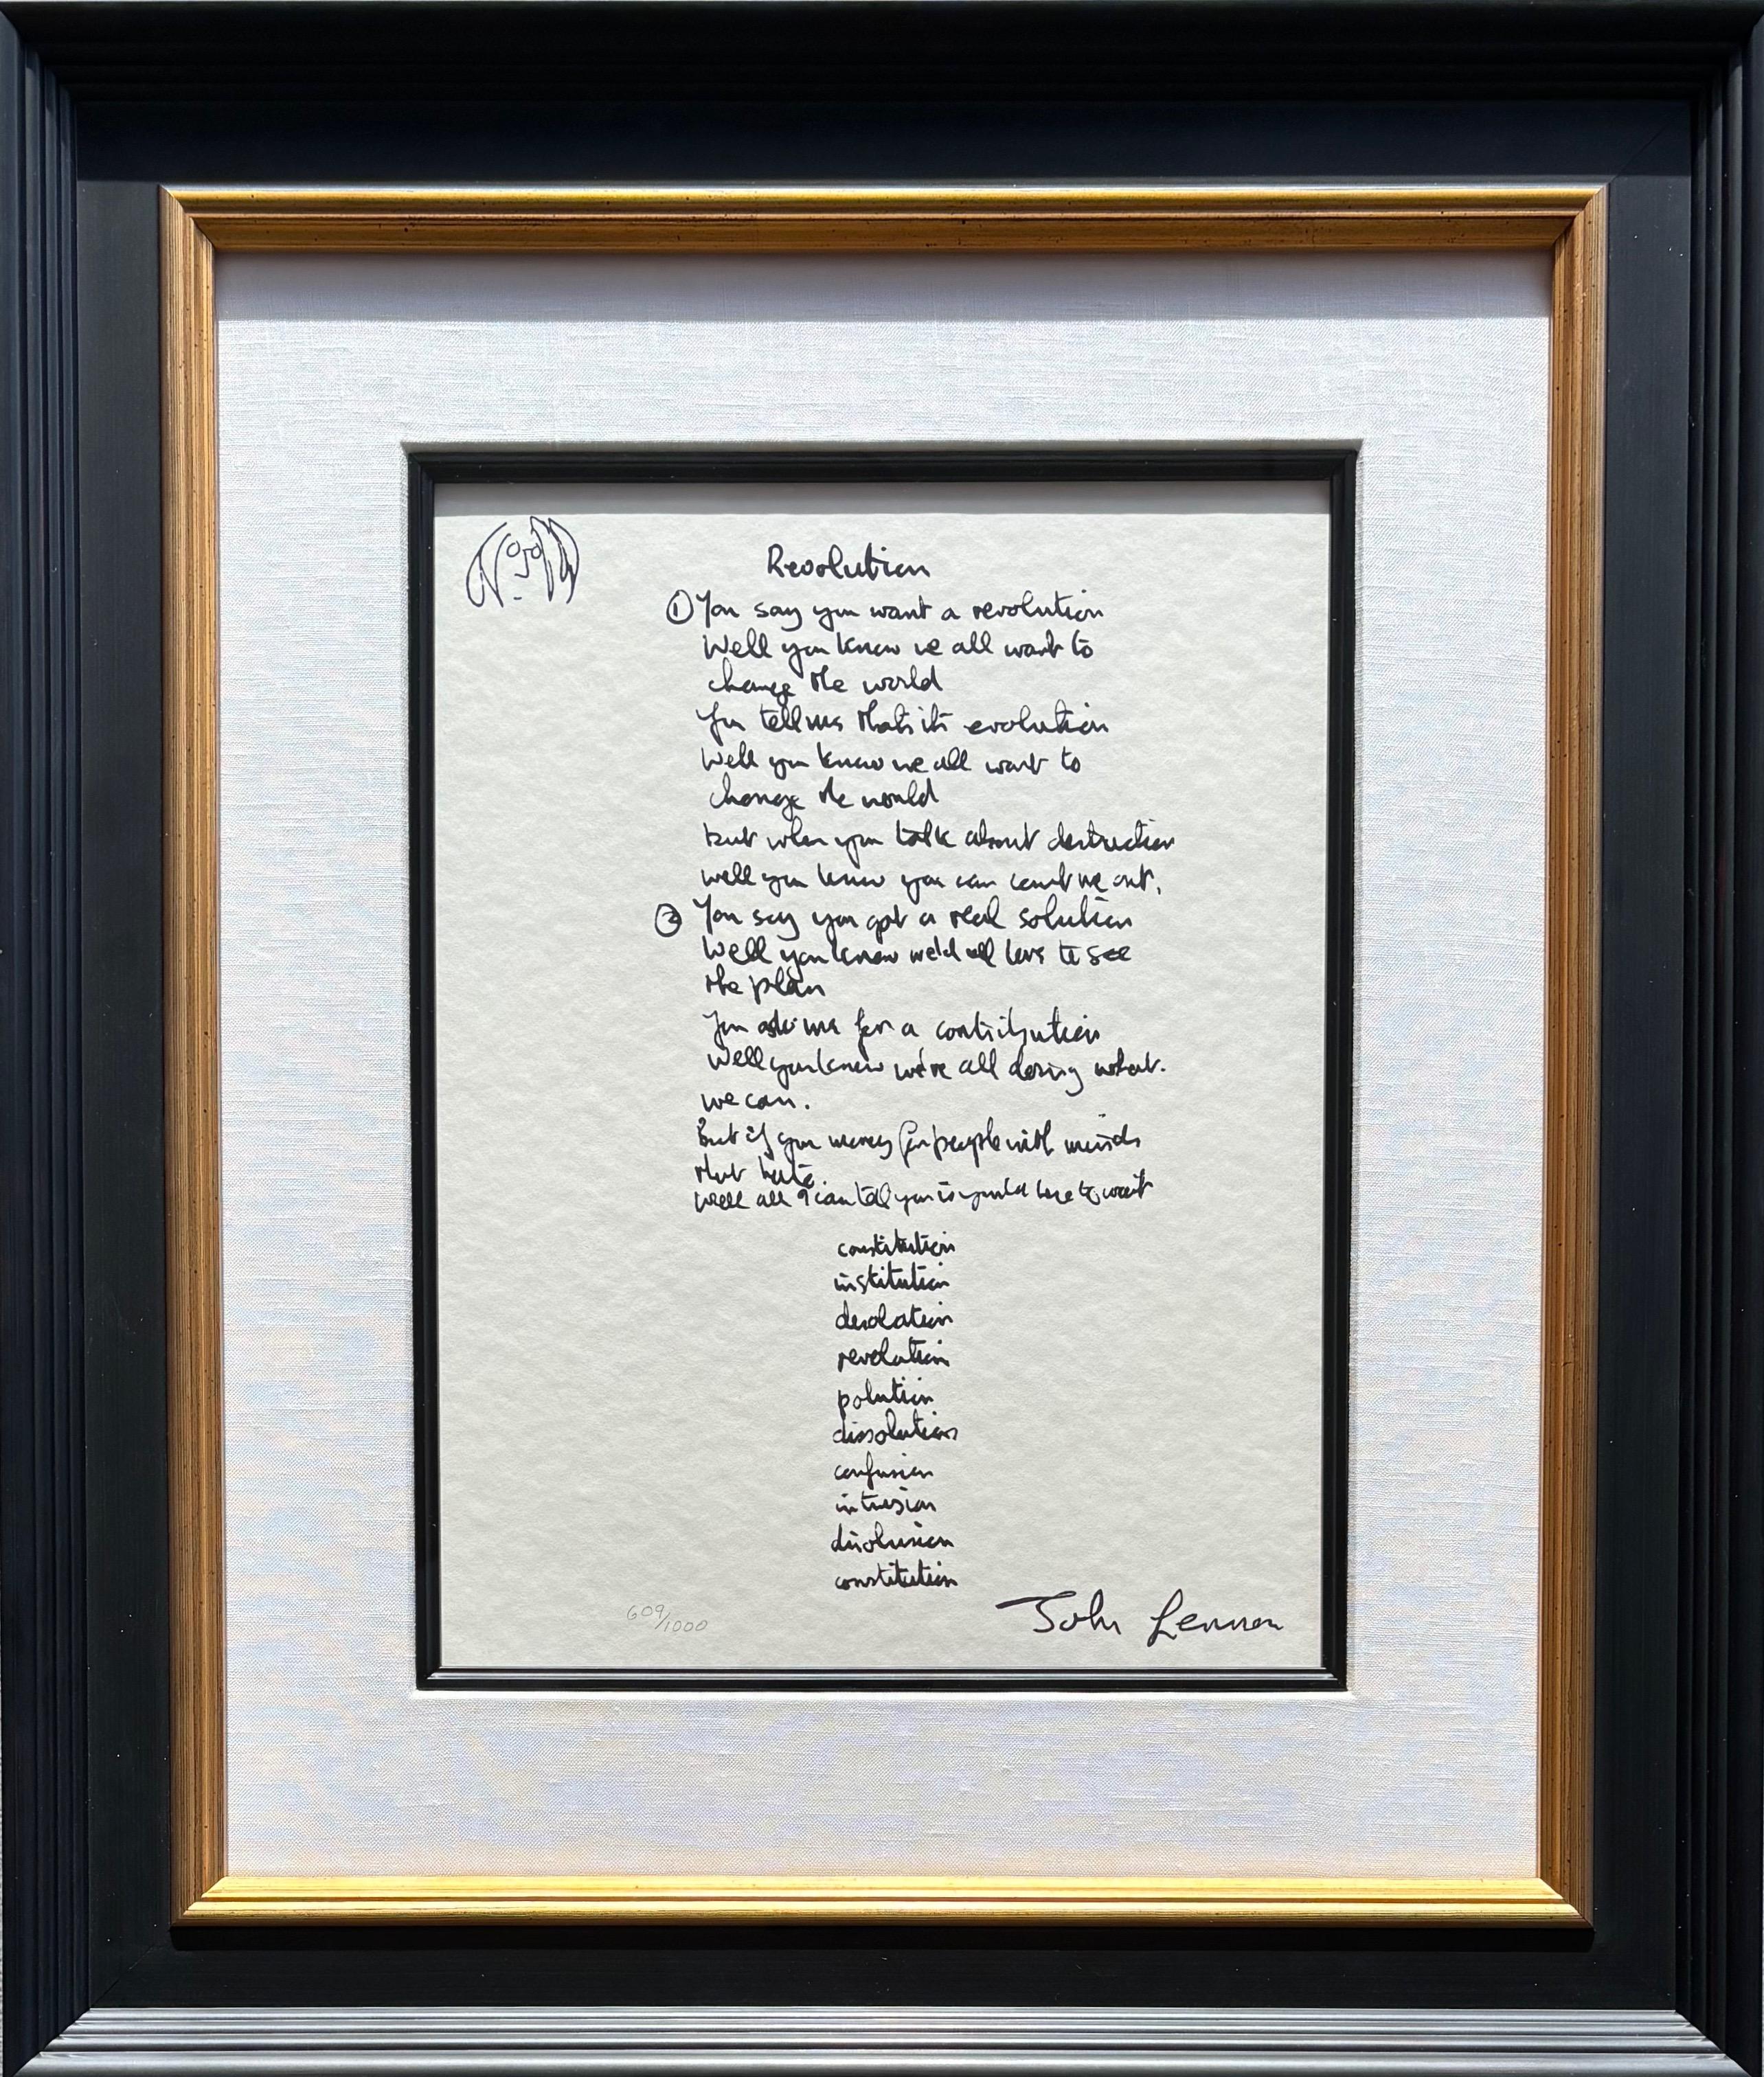 John Lennon Print - "Revolution" Limited Edition Hand Written Lyrics